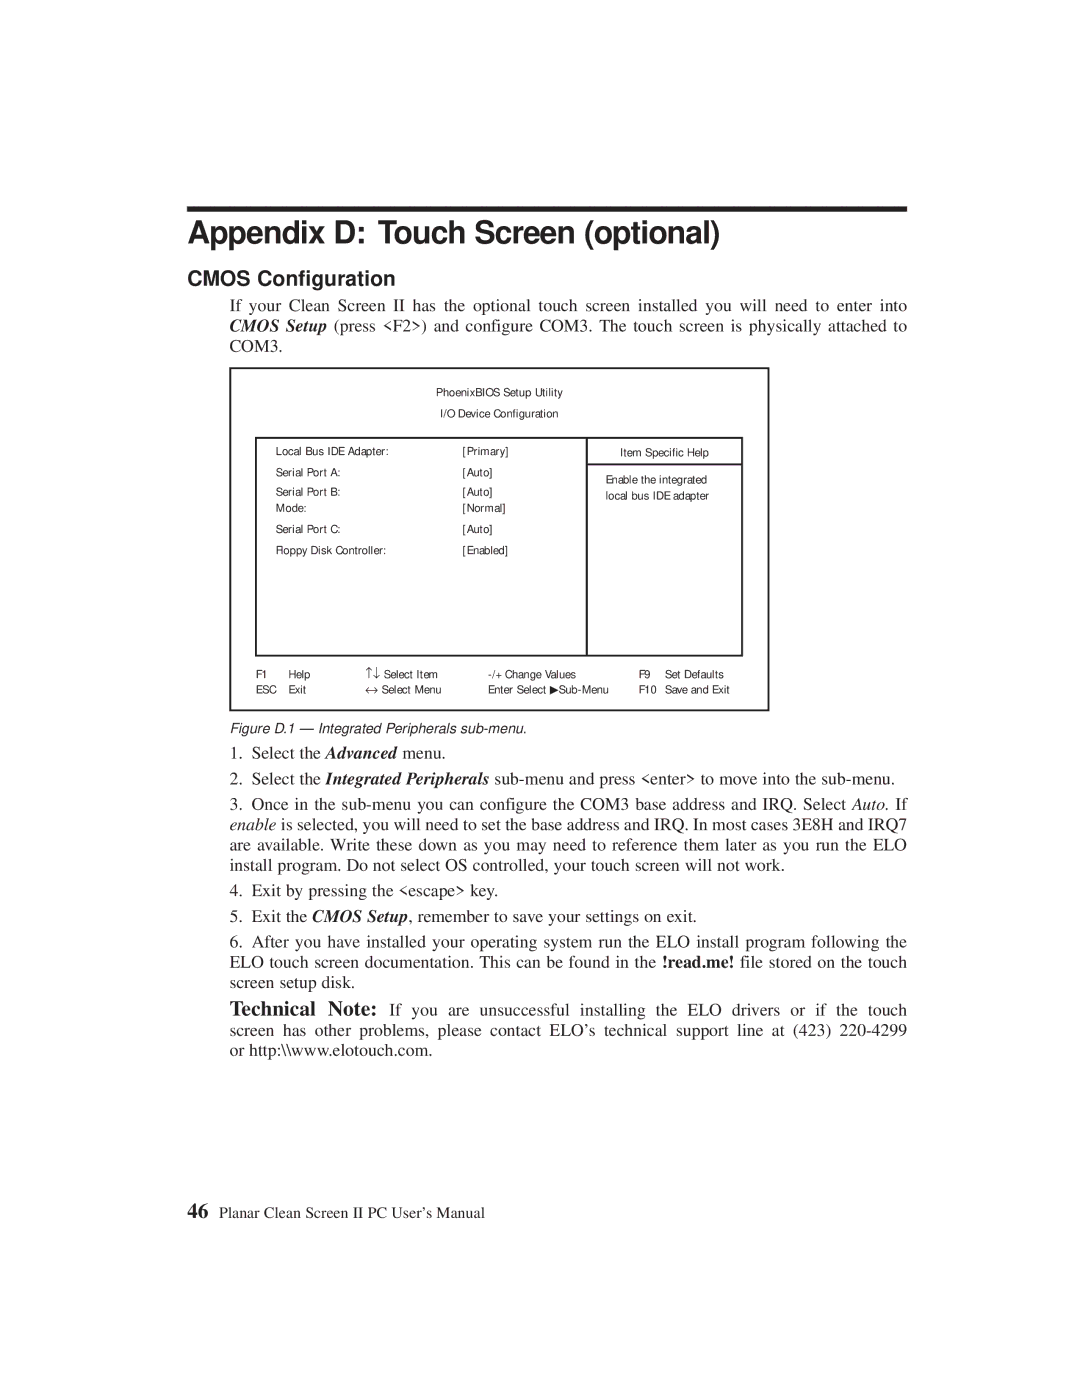 Planar C3215 user manual Appendix D Touch Screen optional, Cmos Configuration 